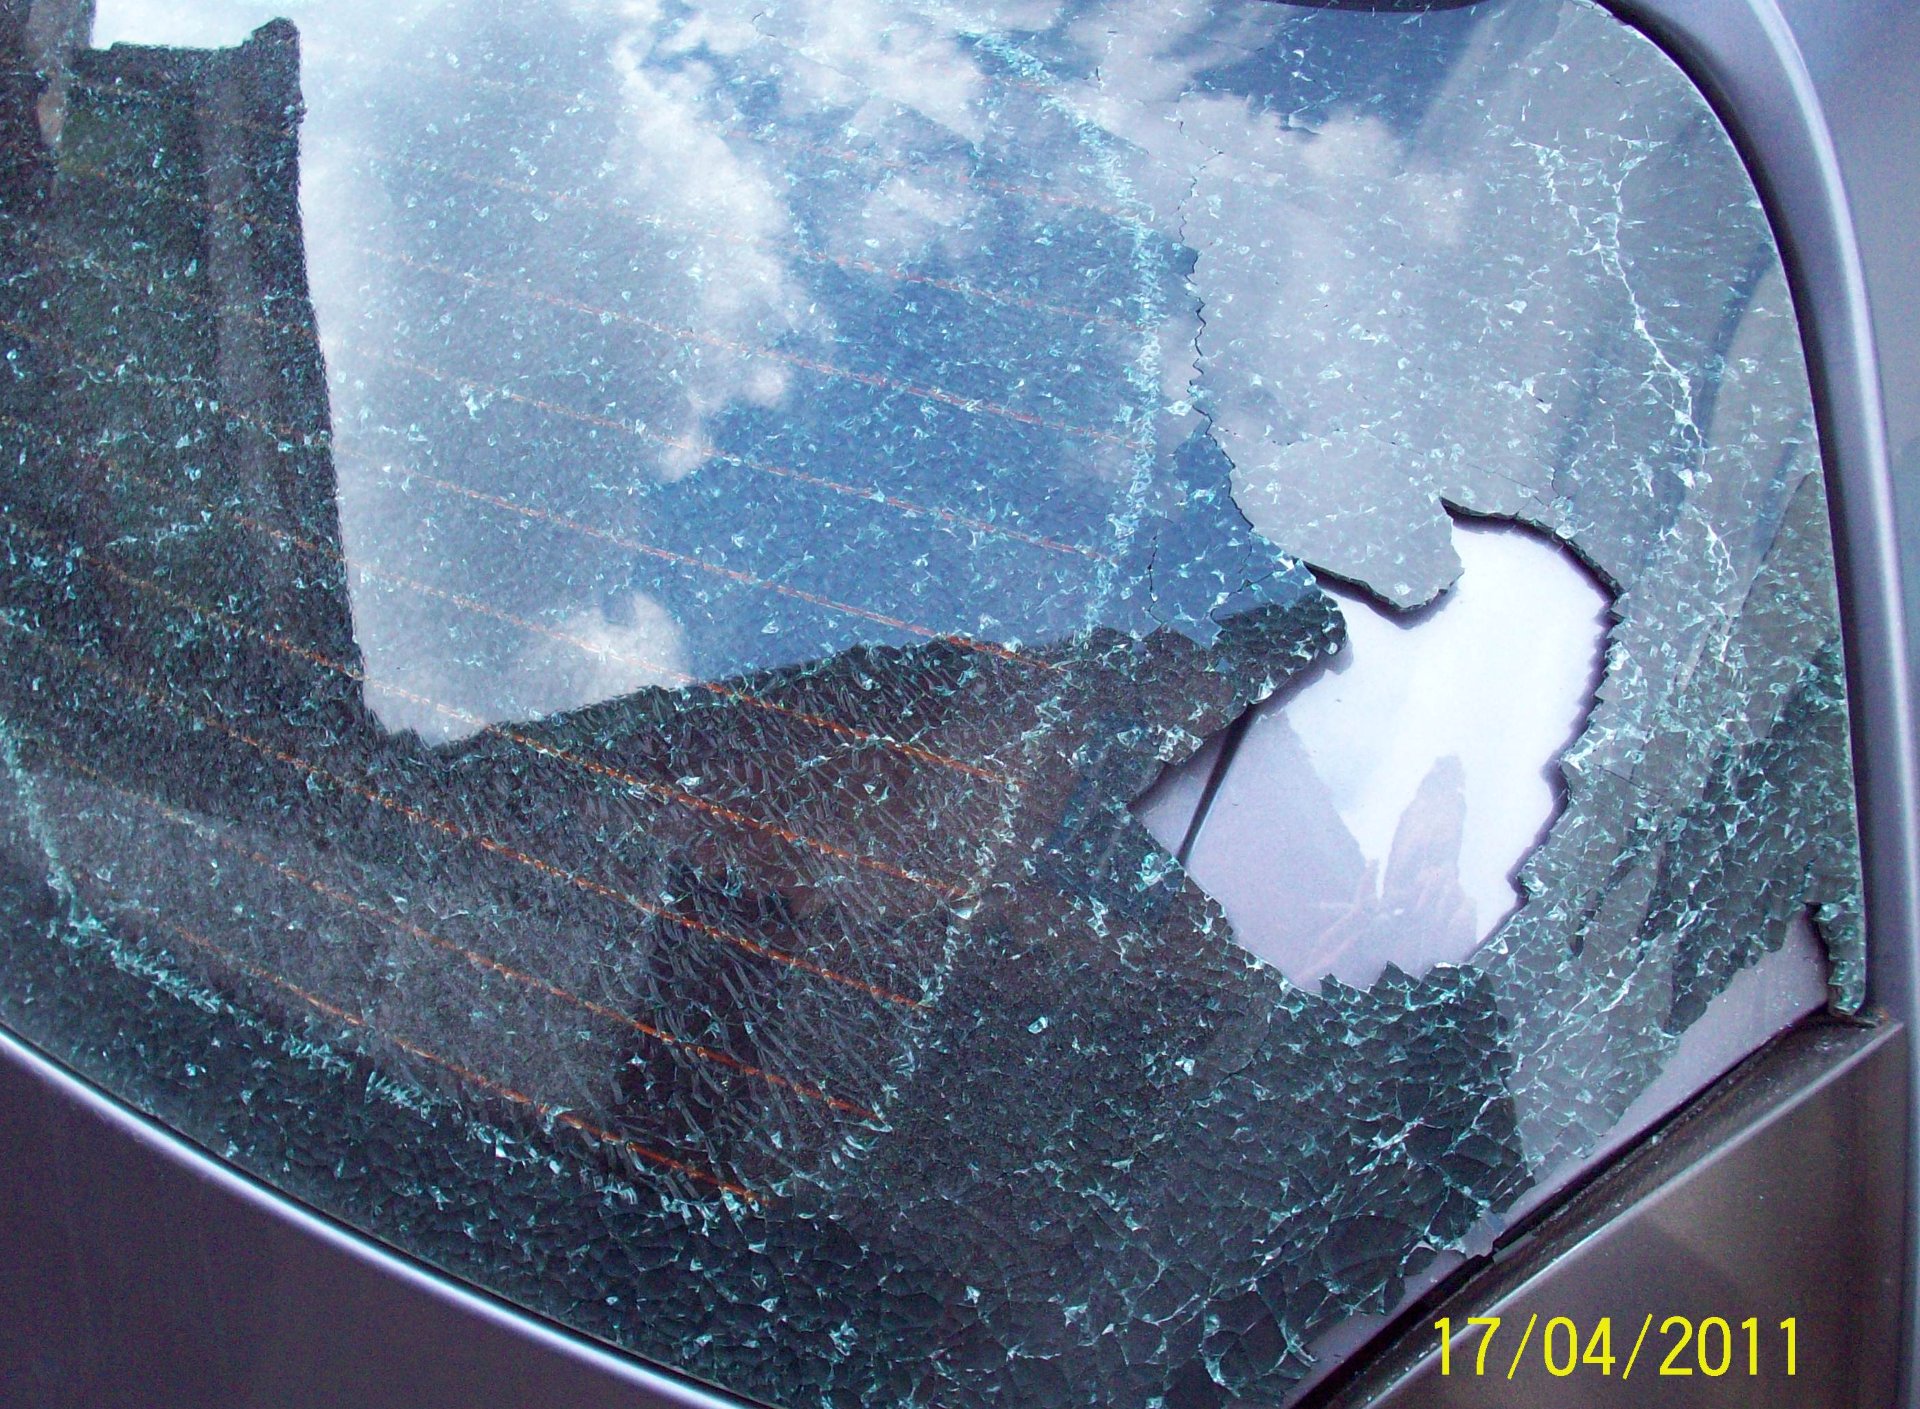 Разбитые z. Разбитое стекло багажника машины. Ларгус с разбитым стеклом. Разбитое стекло с буквой z. Разбитые стекла с буквой z.